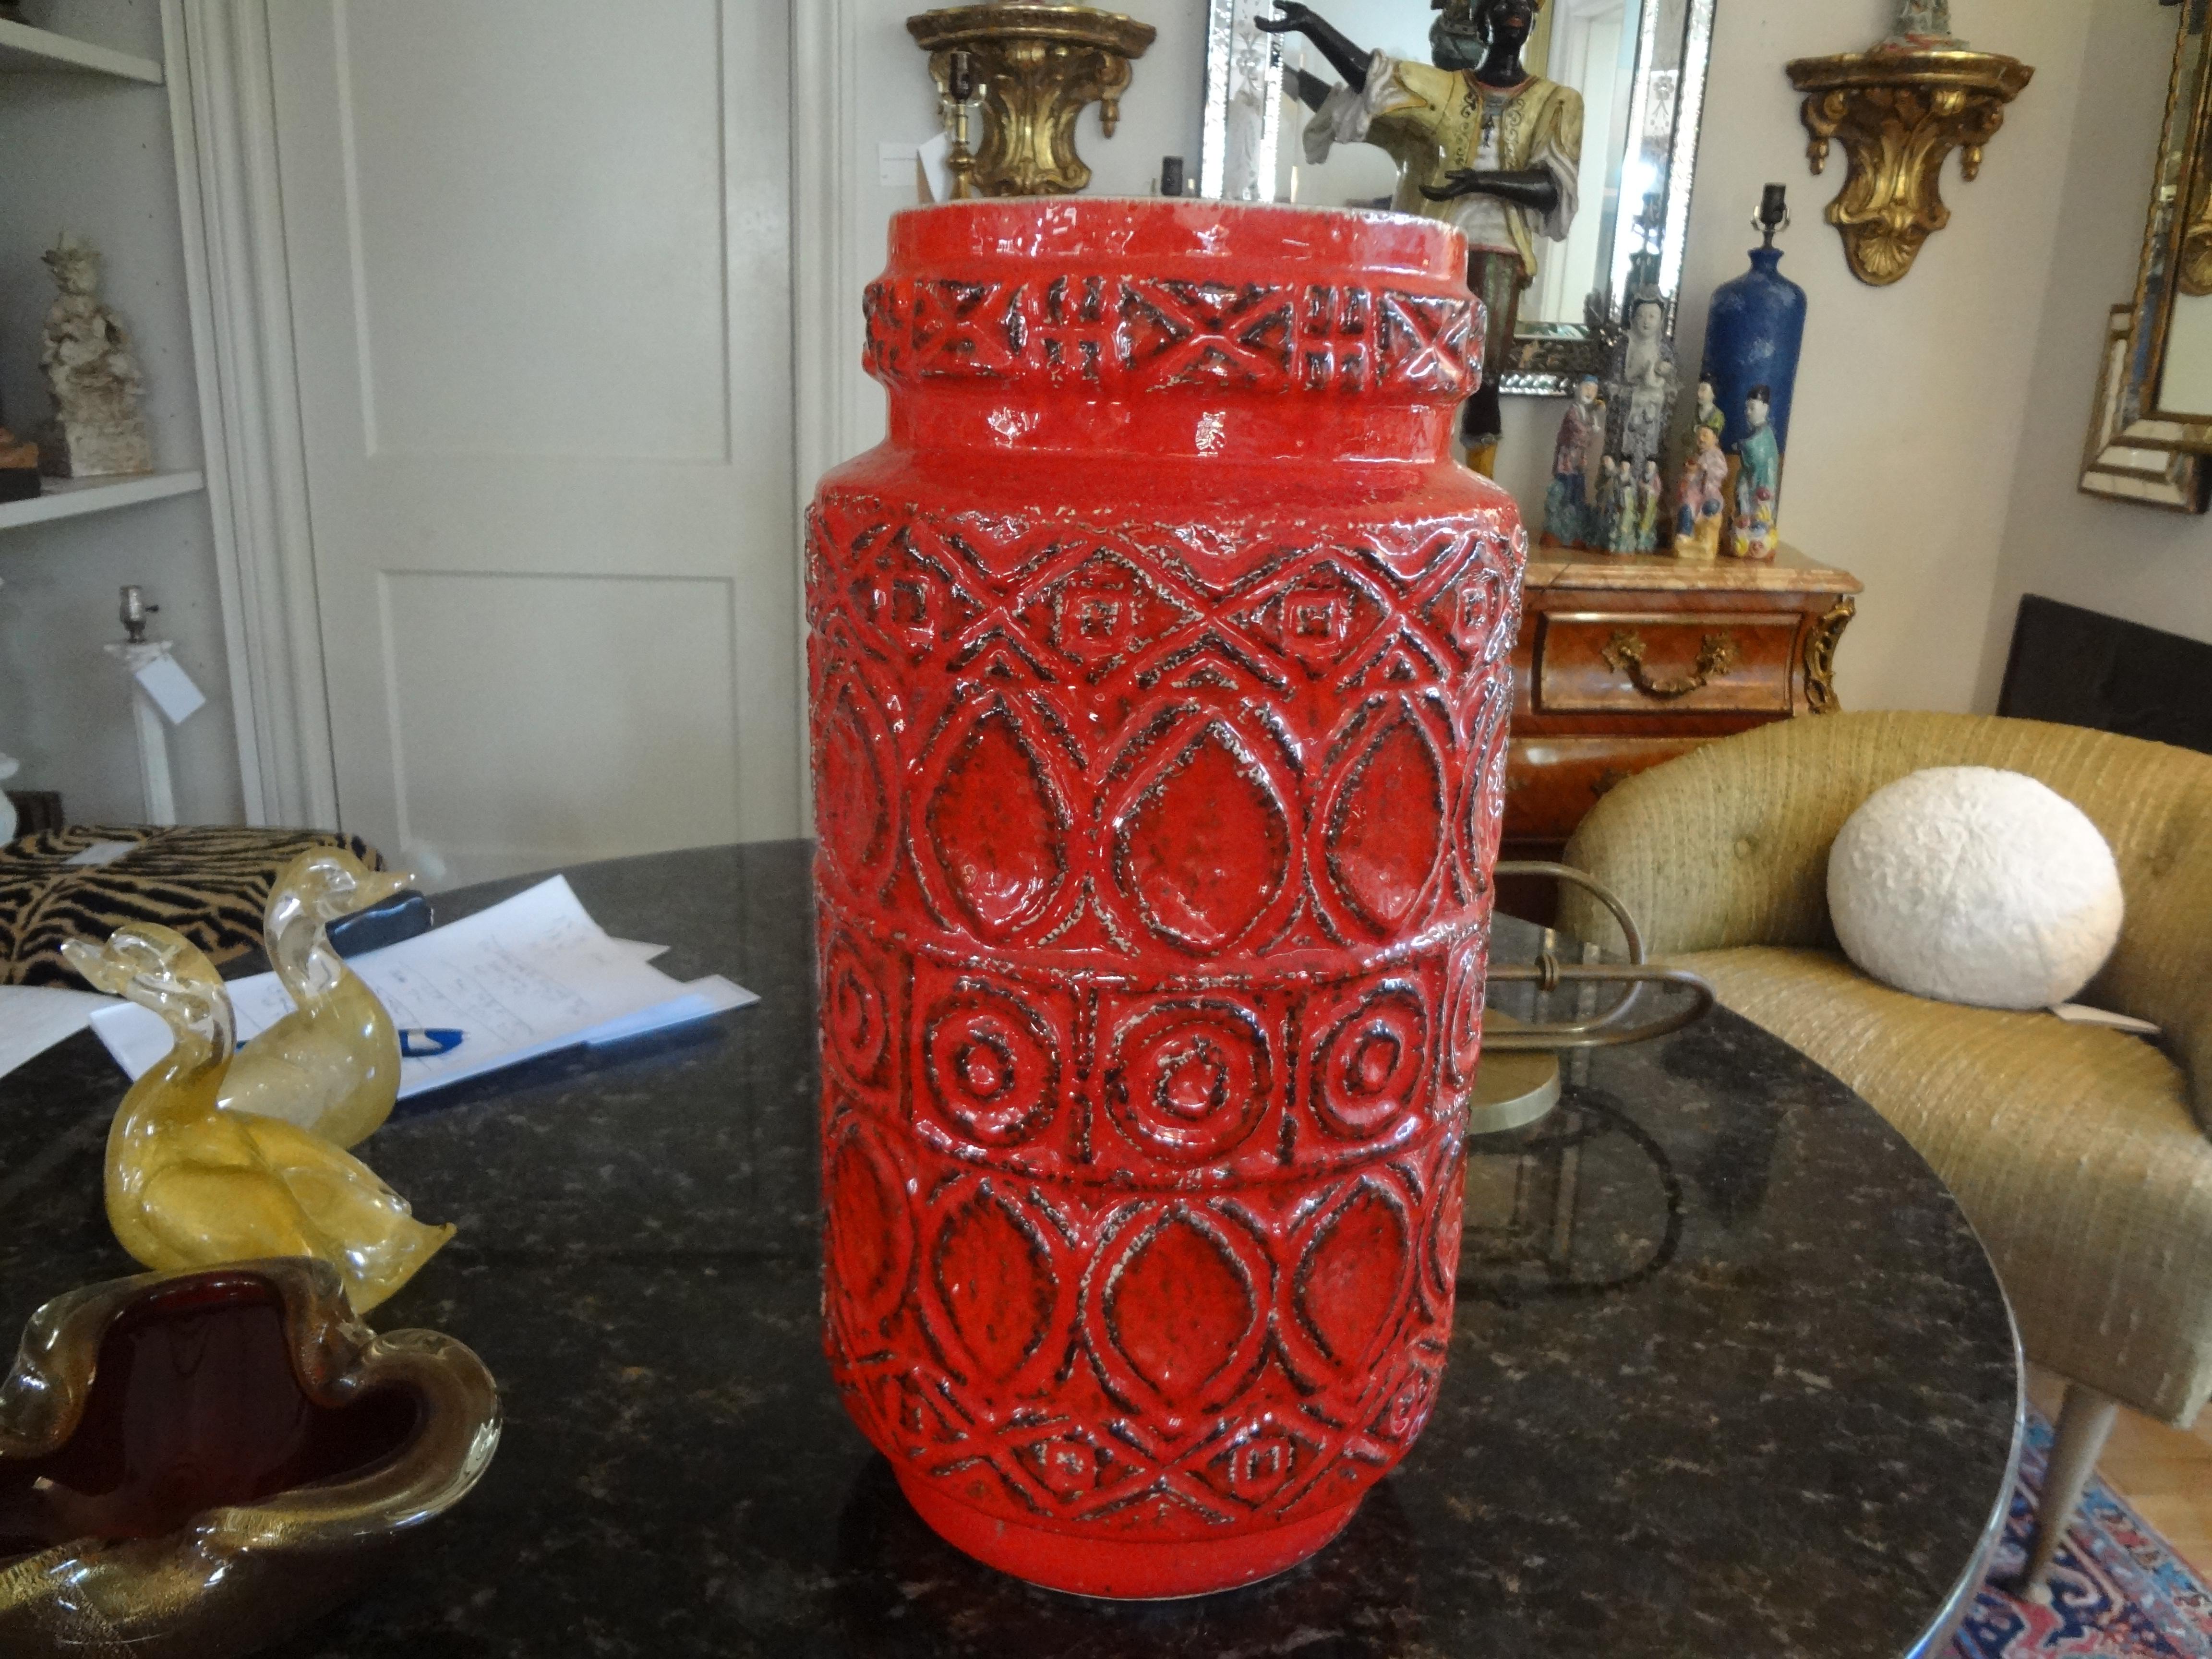 Large Mid-Century Modern West German glazed pottery vase.
Stunning large Mid-Century Modern West German tomato red glazed pottery vase with a great stylized geometric decoration.